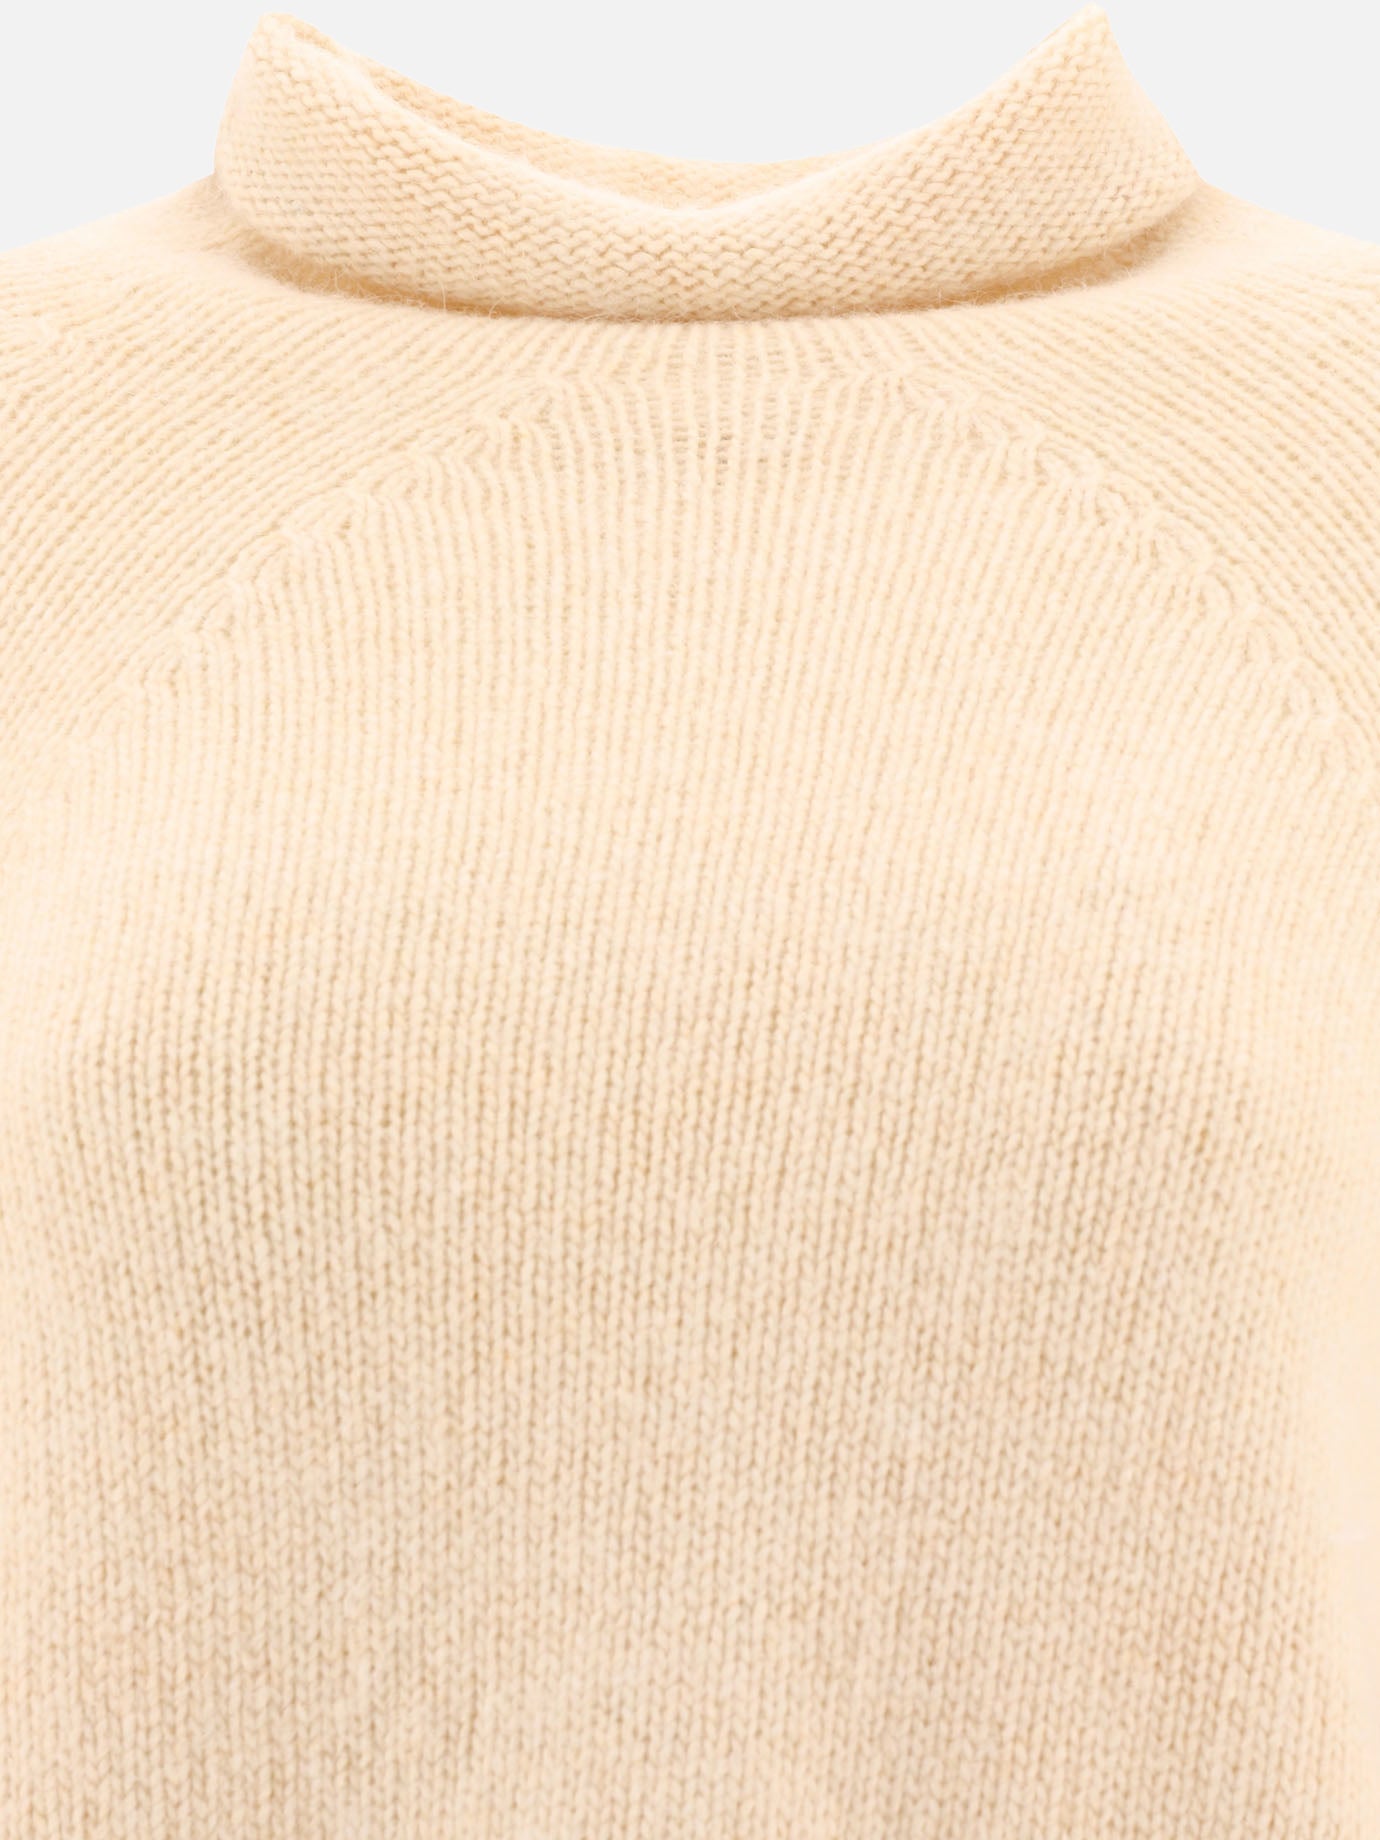 "Roxy" turtleneck sweater